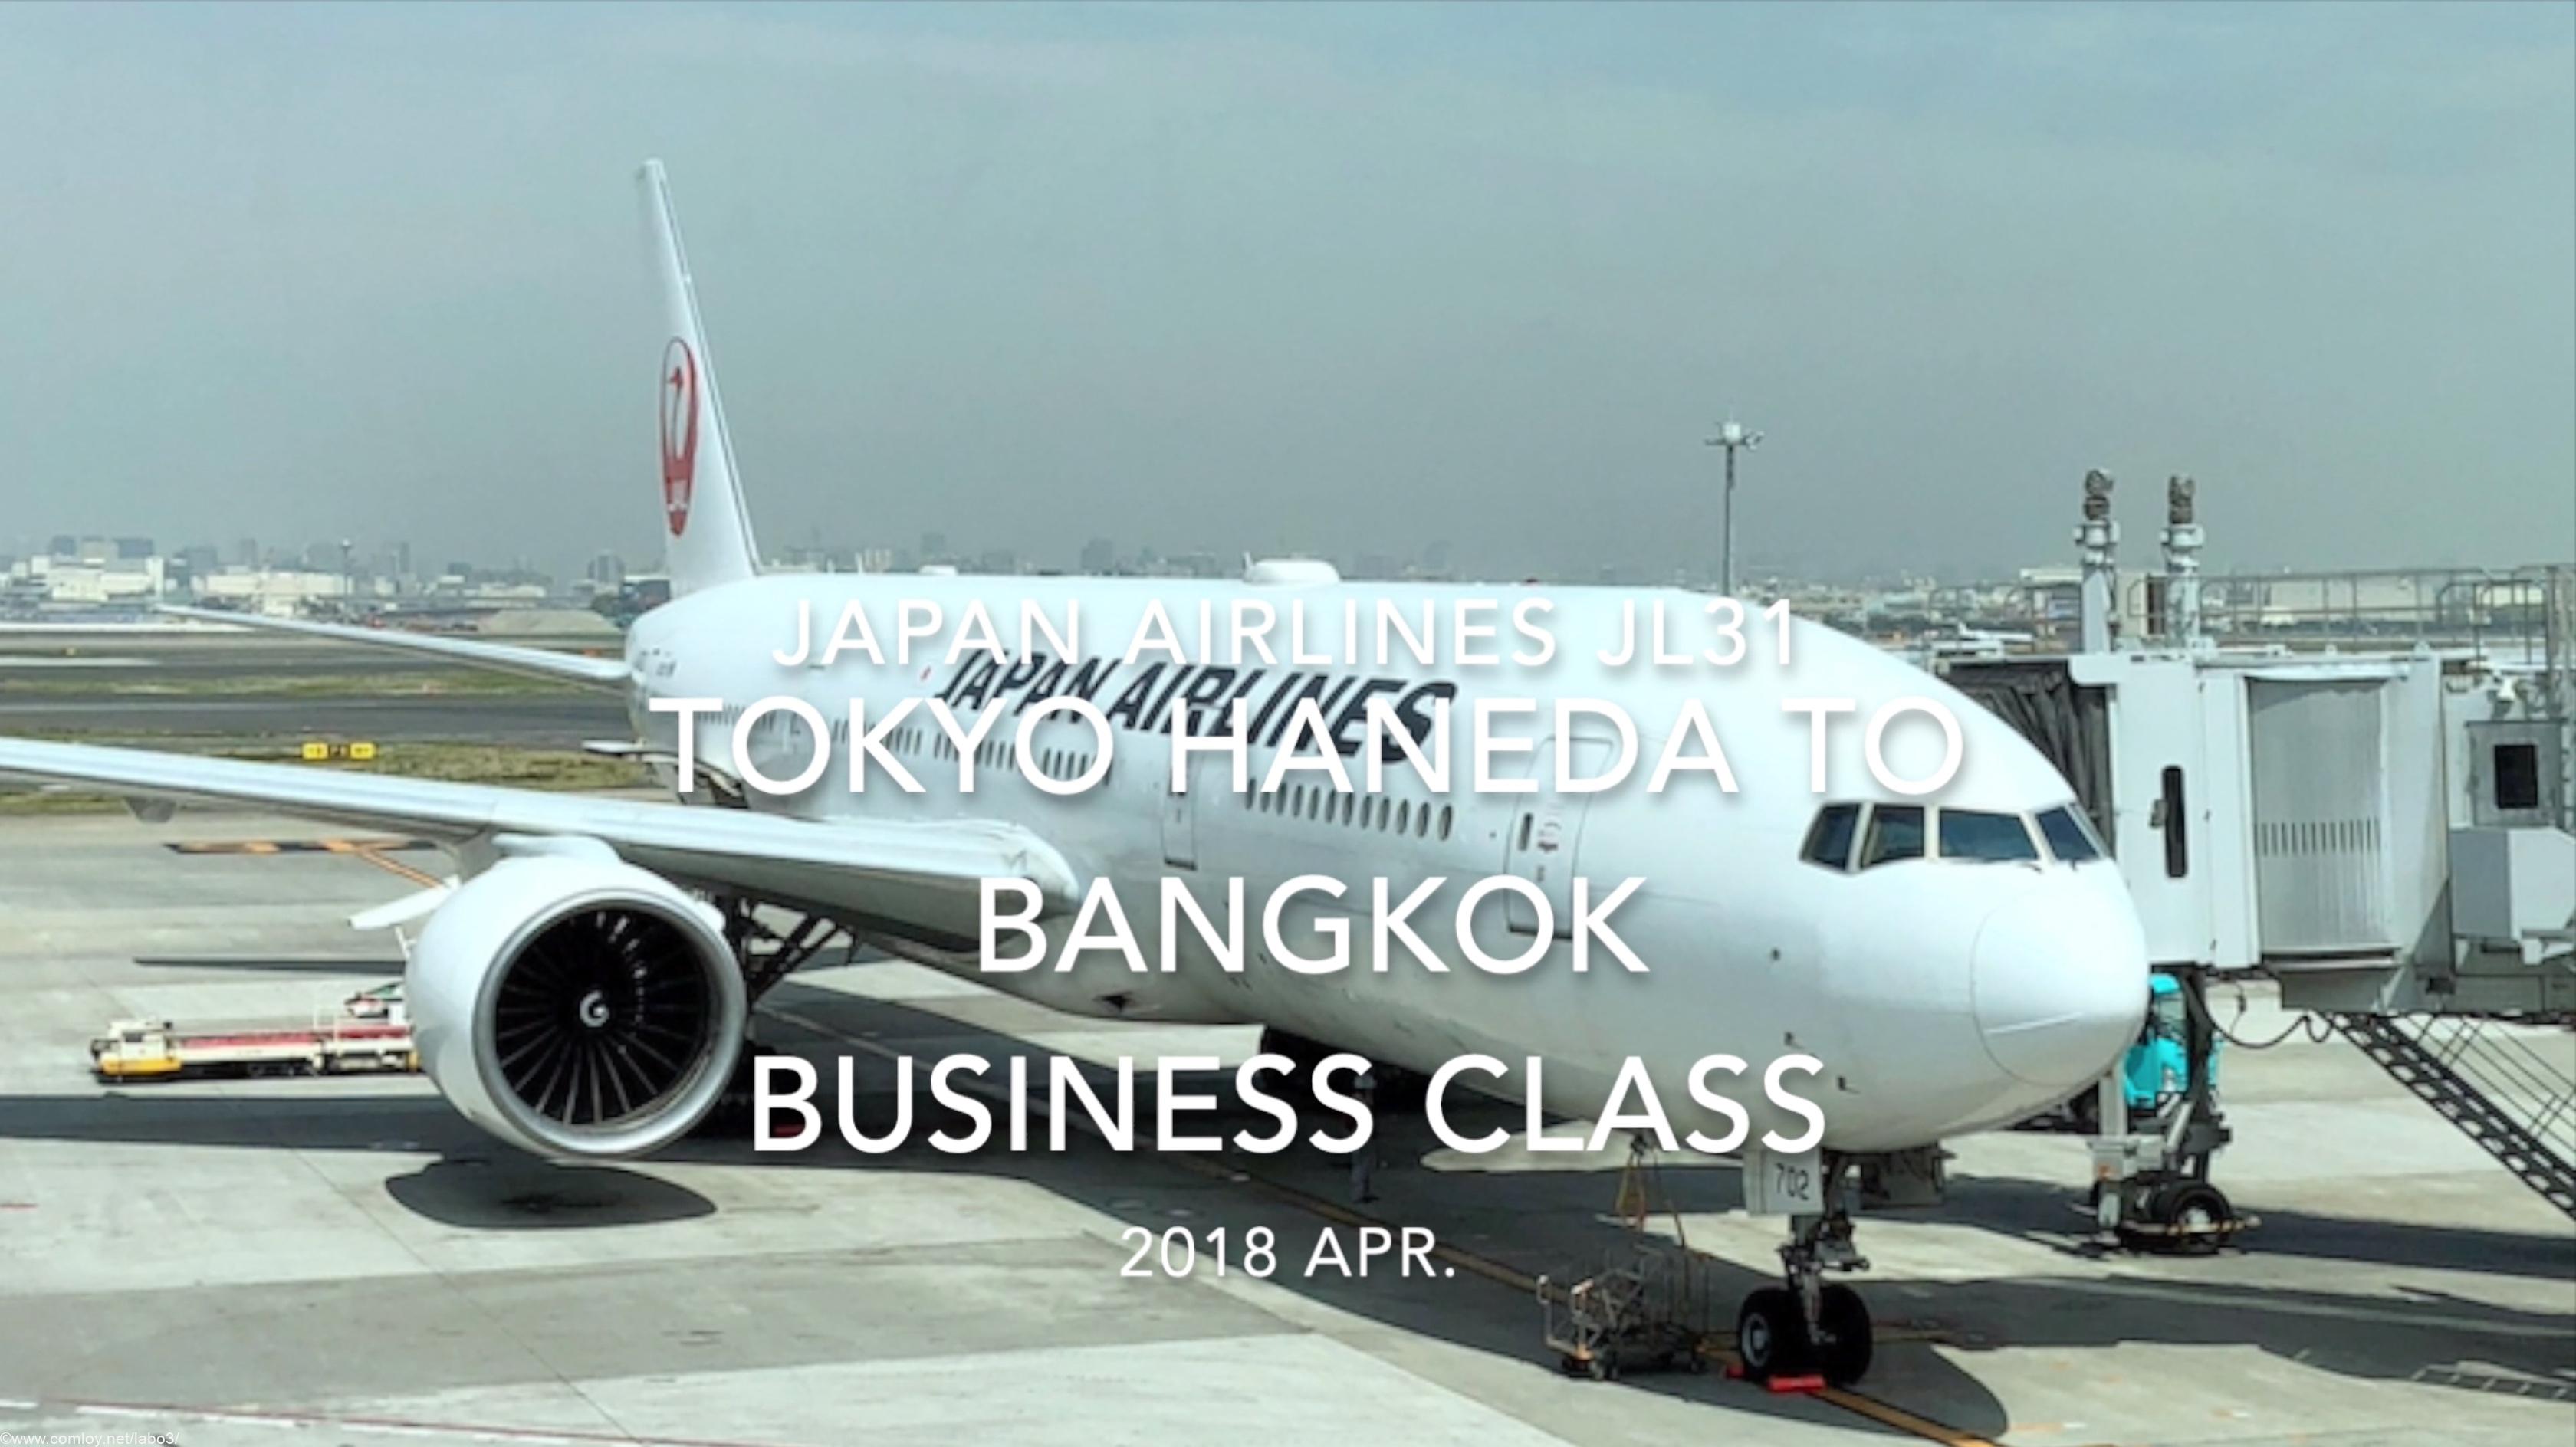 【Flight Report】 Japan Airlines JL31 TOKYO HANEDA TO BANGKOK Business Class 2018 APR 日本航空 羽田- バンコク 搭乗記